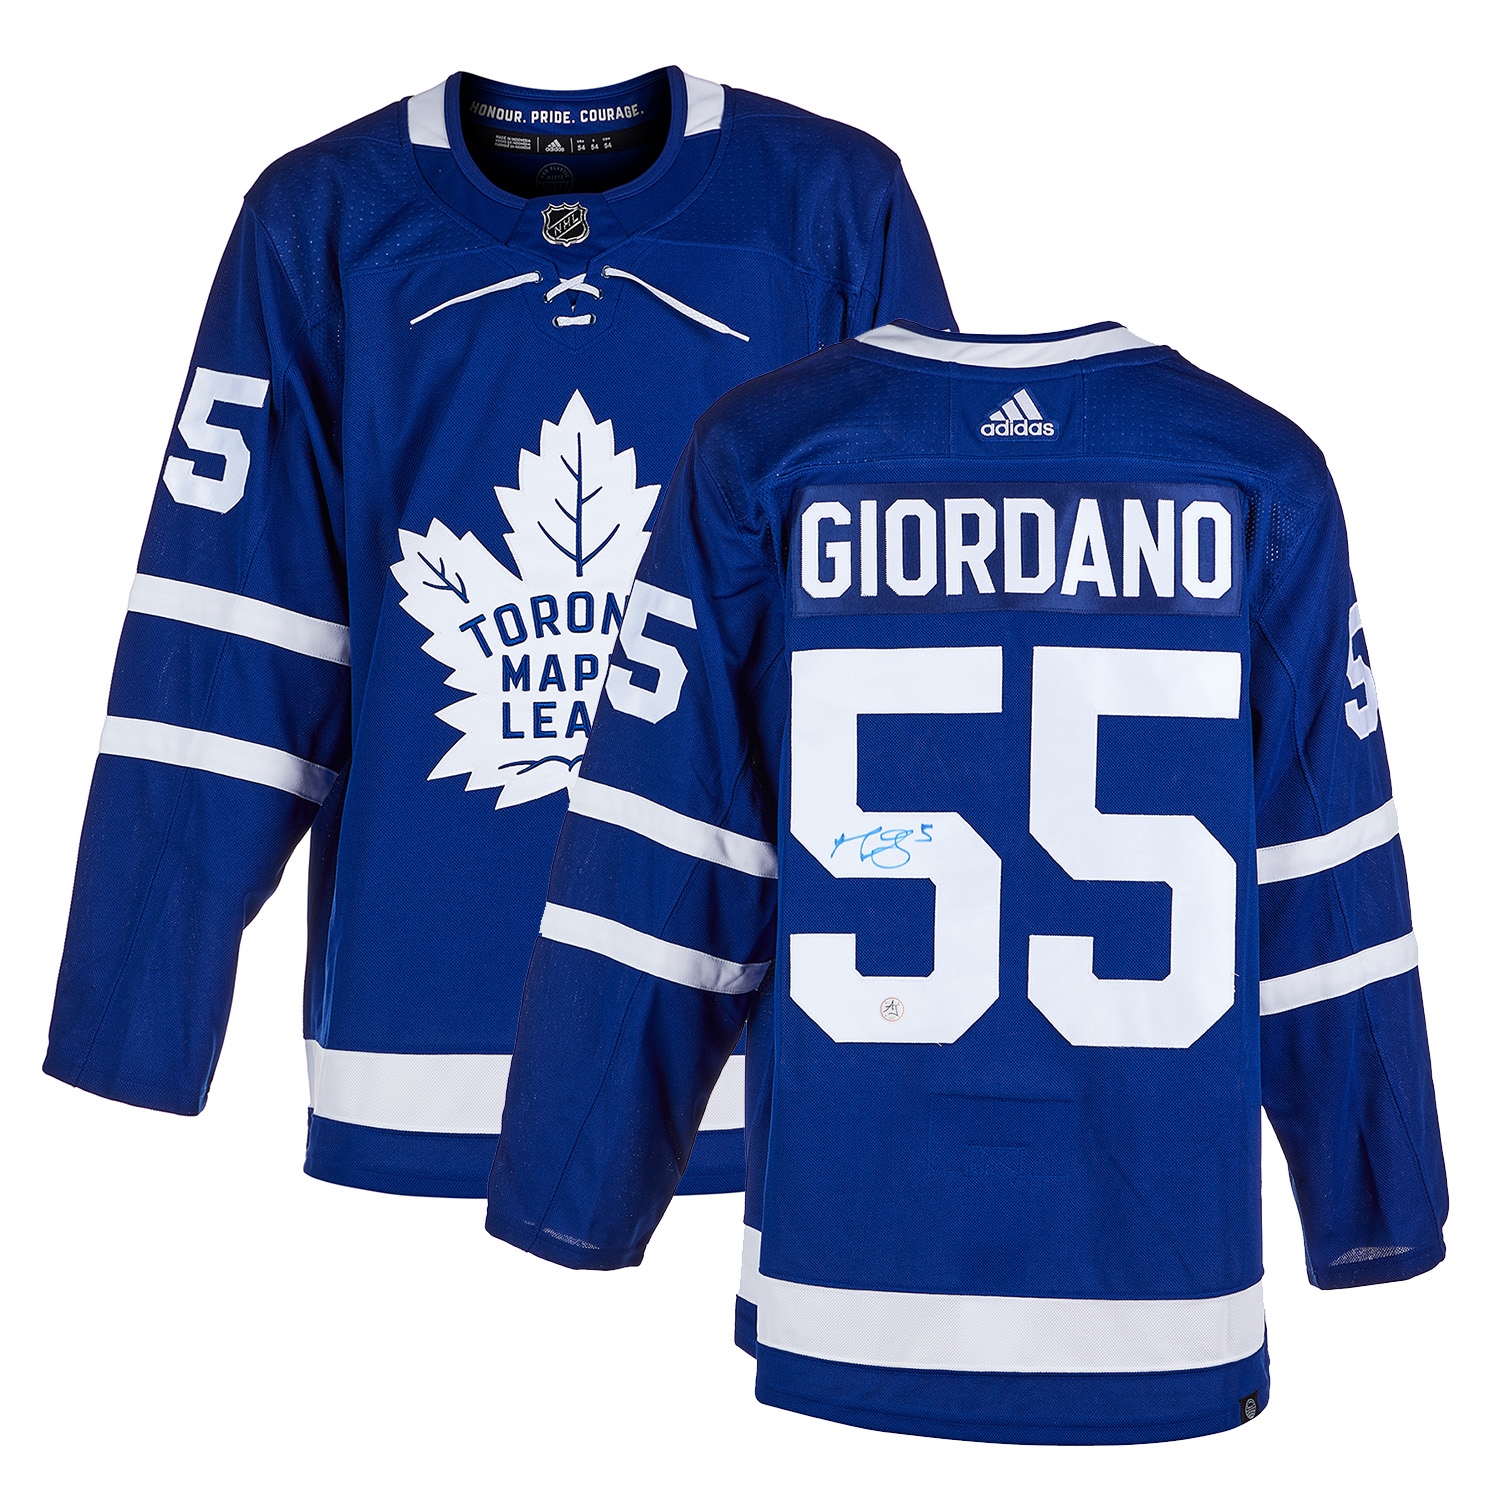 Mark Giordano Autographed Toronto Maple Leafs Adidas Jersey